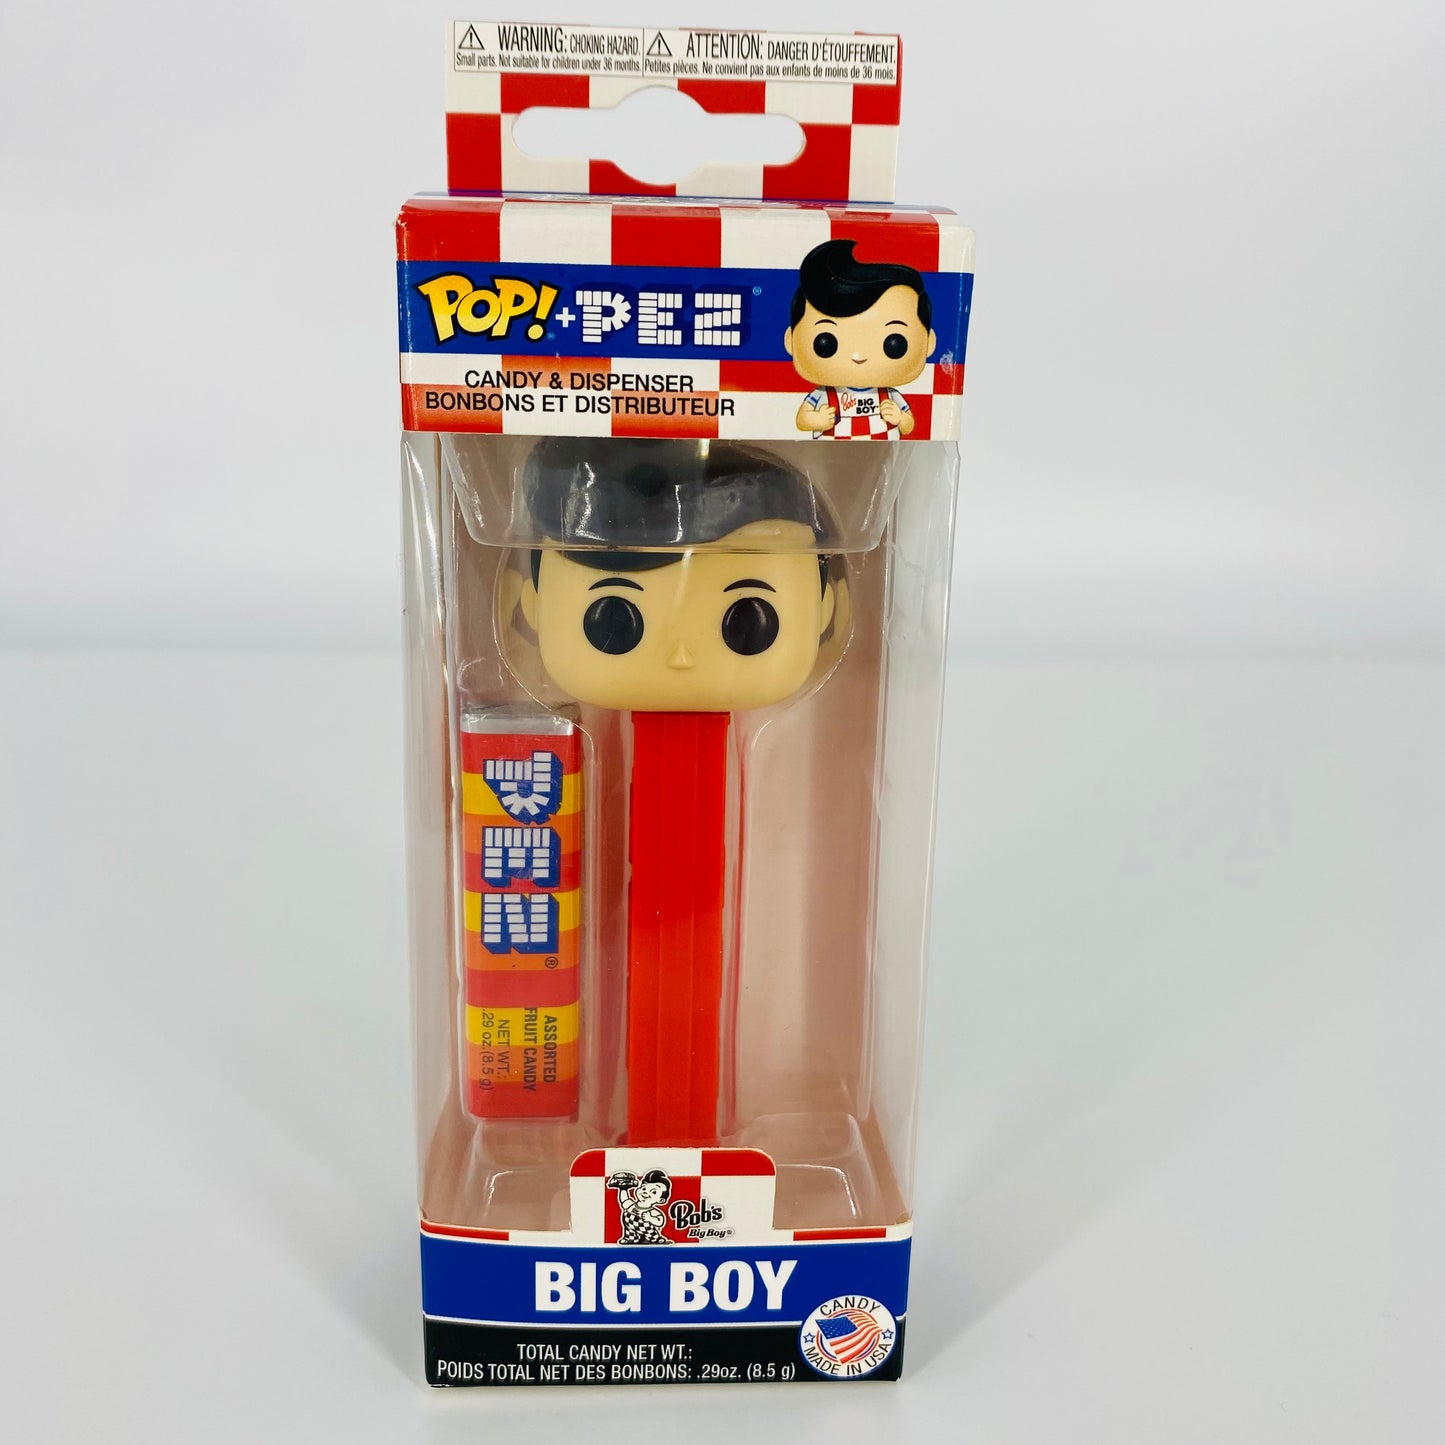 Bob's Big Boy Pop! + PEZ dispenser (2019) boxed